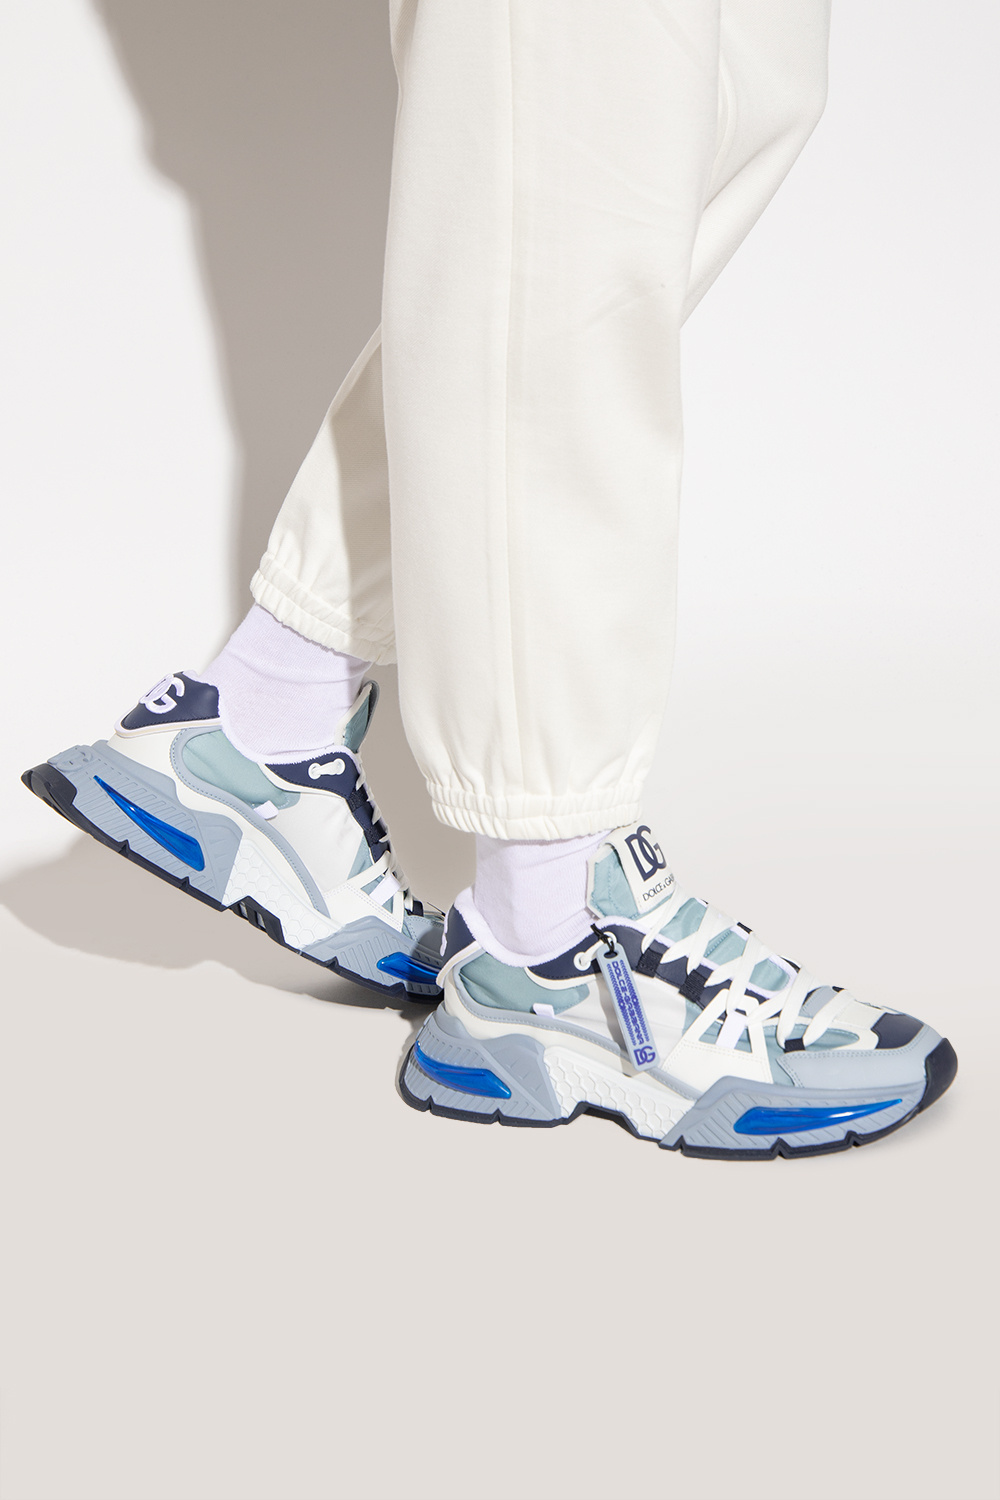 Dolce & Gabbana Kids graffiti-print stretch-cotton leggings ‘Air Master’ sneakers